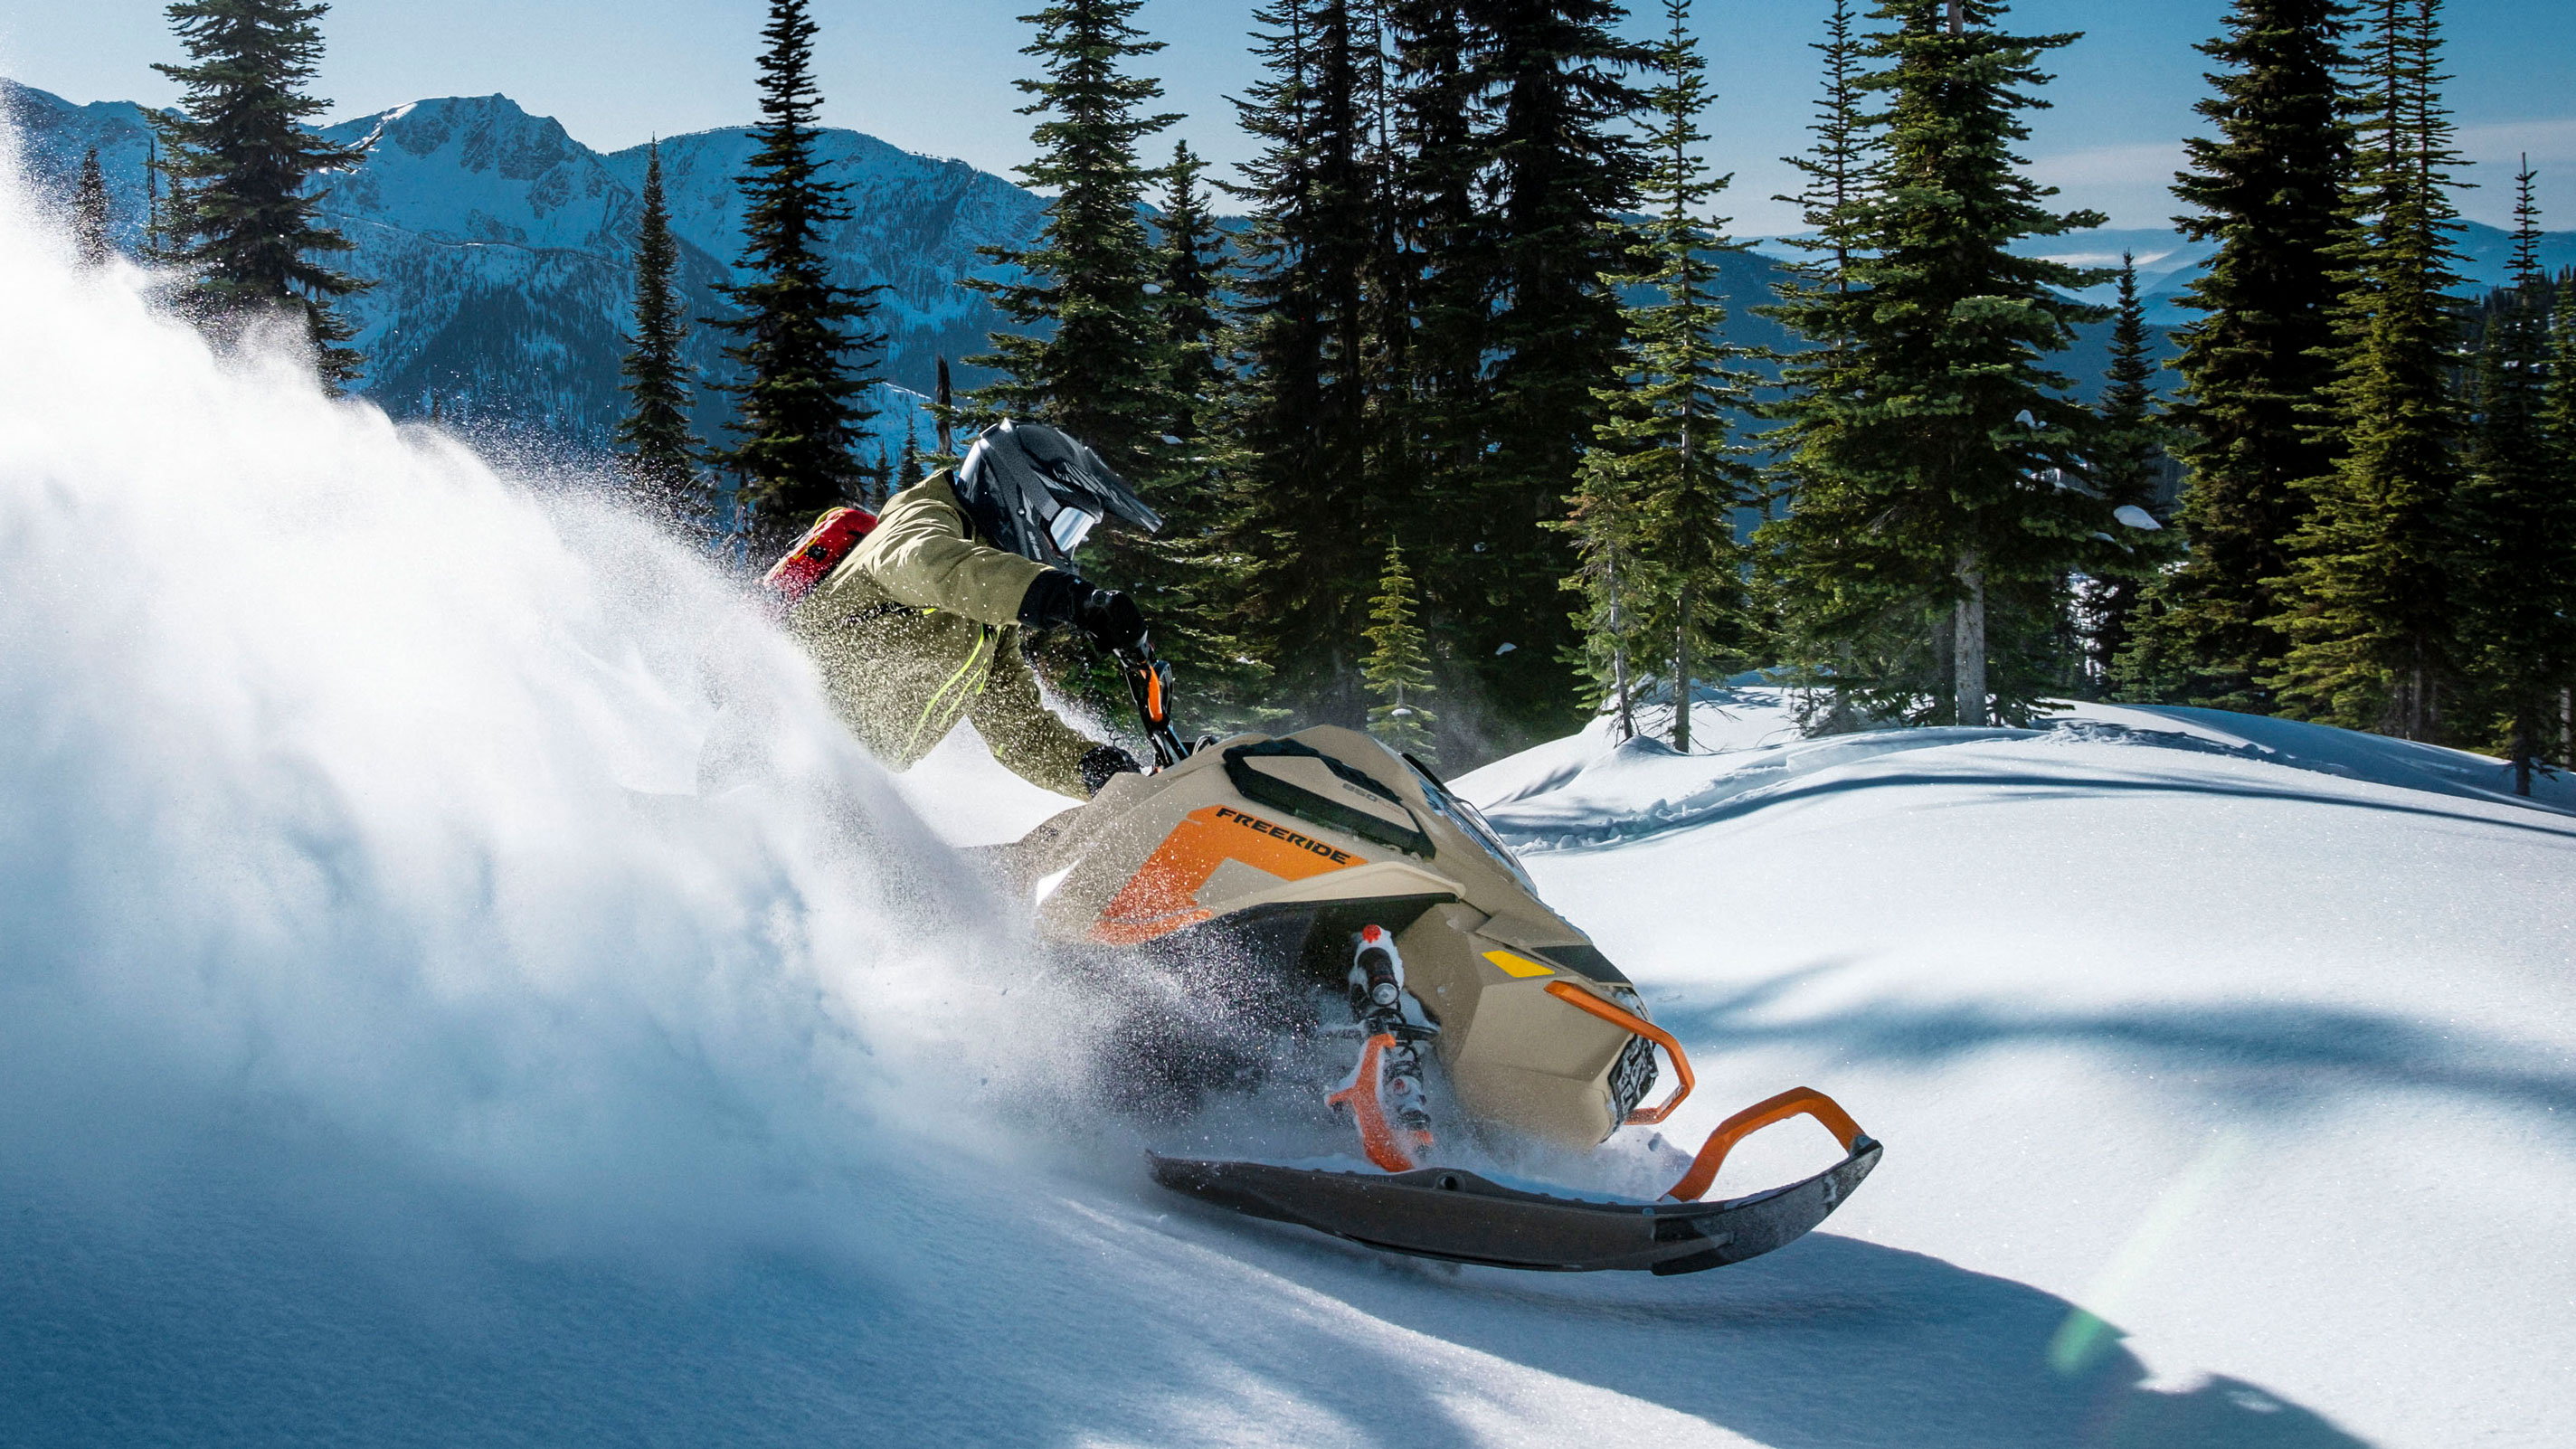 2022 SkiDoo Freeride for sale DeepSnow snowmobile BRP World